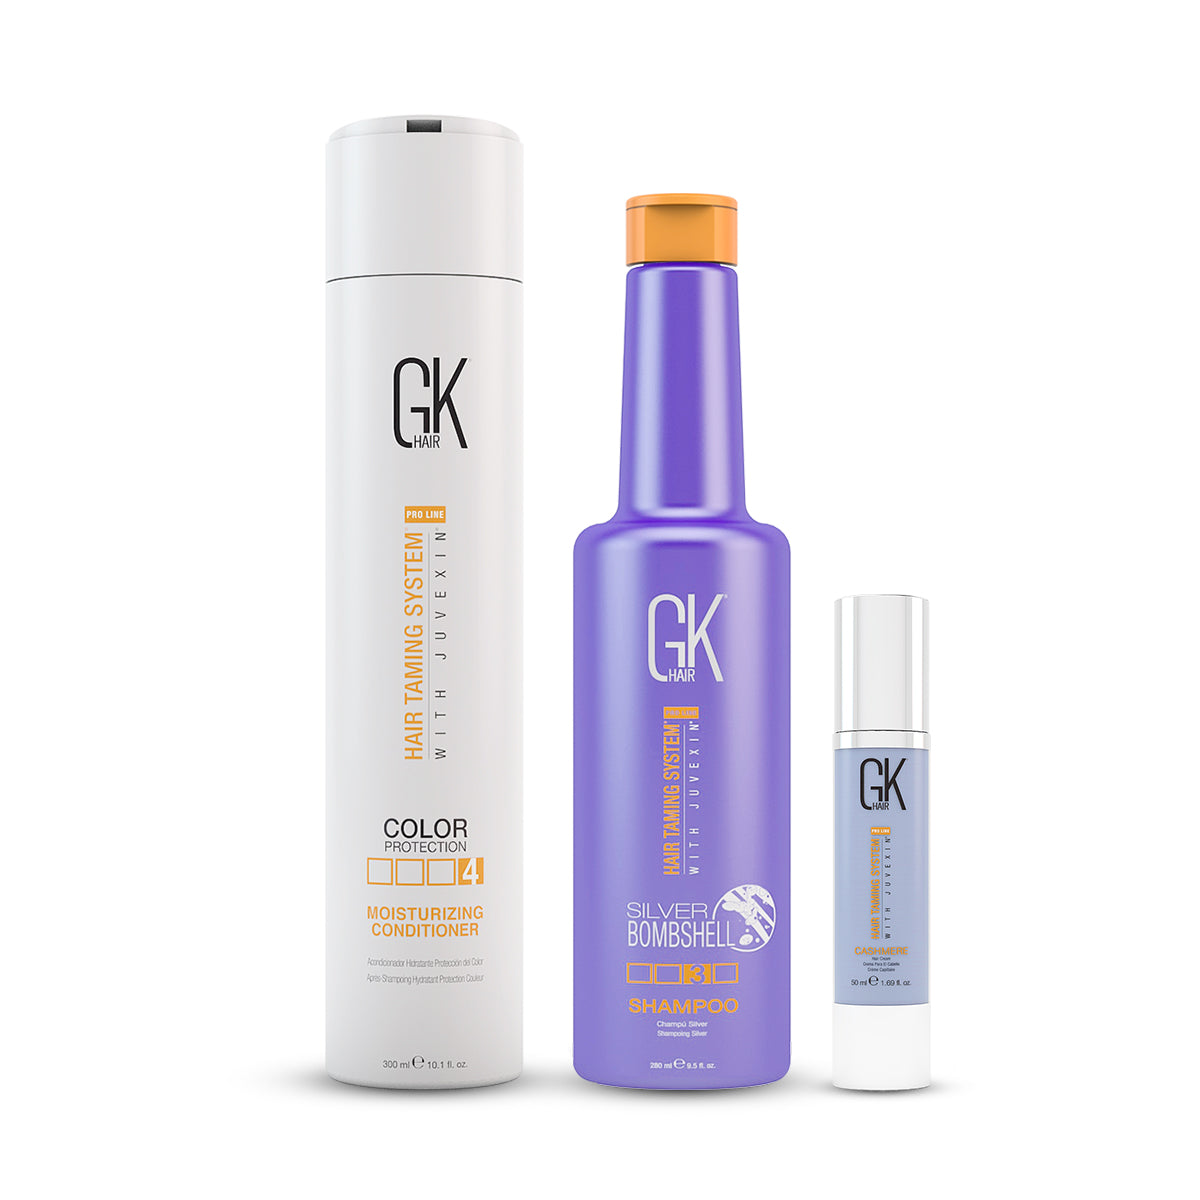 GK Hair Silver Bombshell Shampoo 280 Ml Moisturizing Conditioner 300 Ml and Cashmere 50 Ml